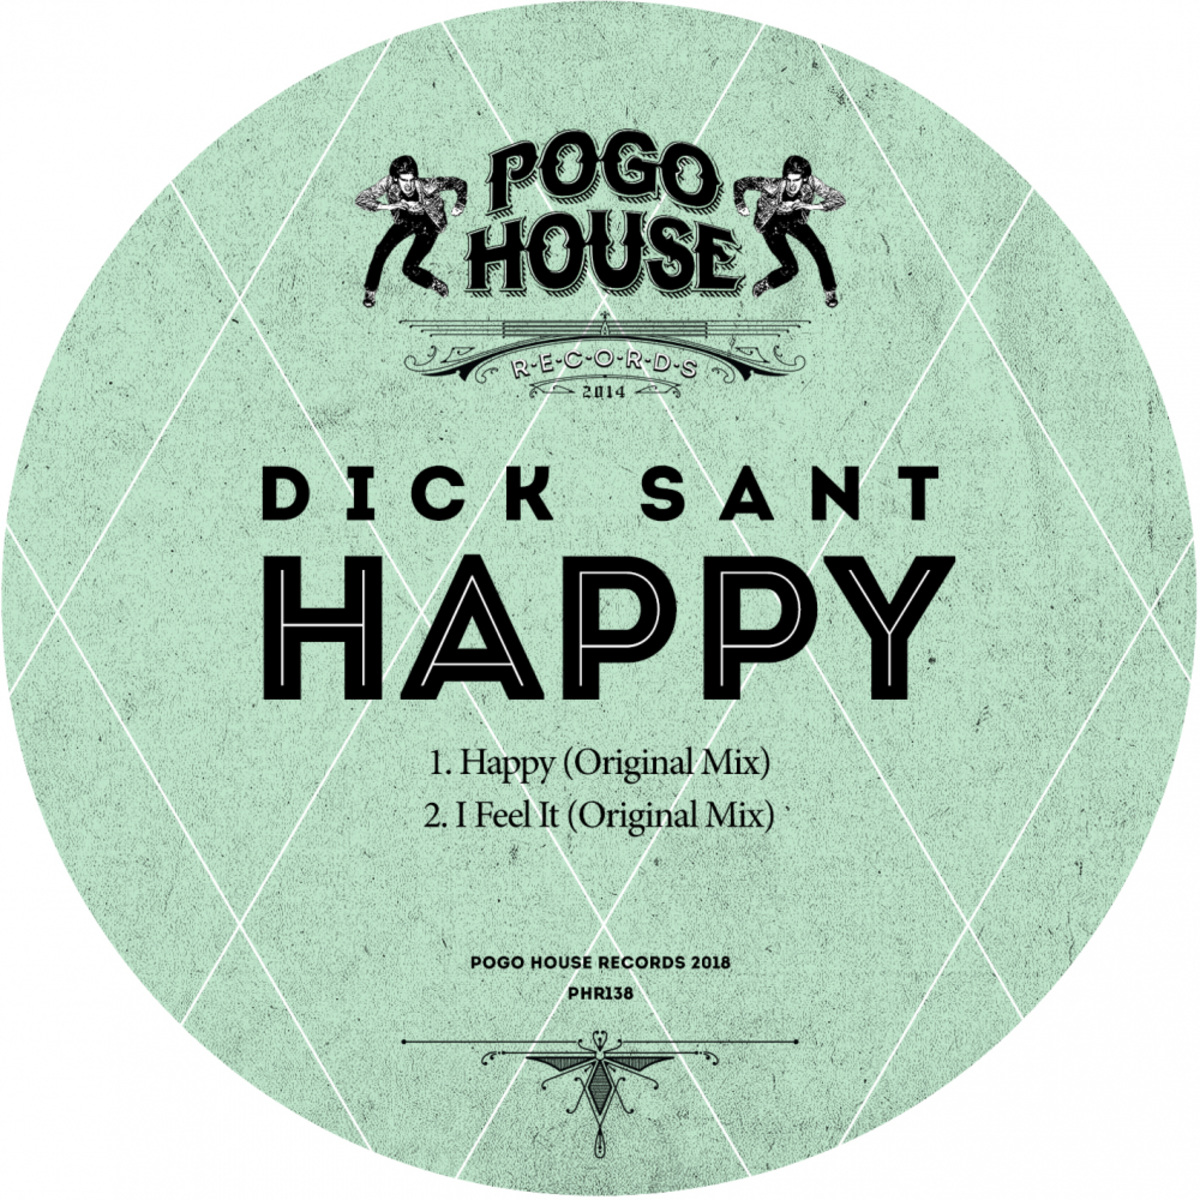 Dick Sant - Happy / Pogo House Records